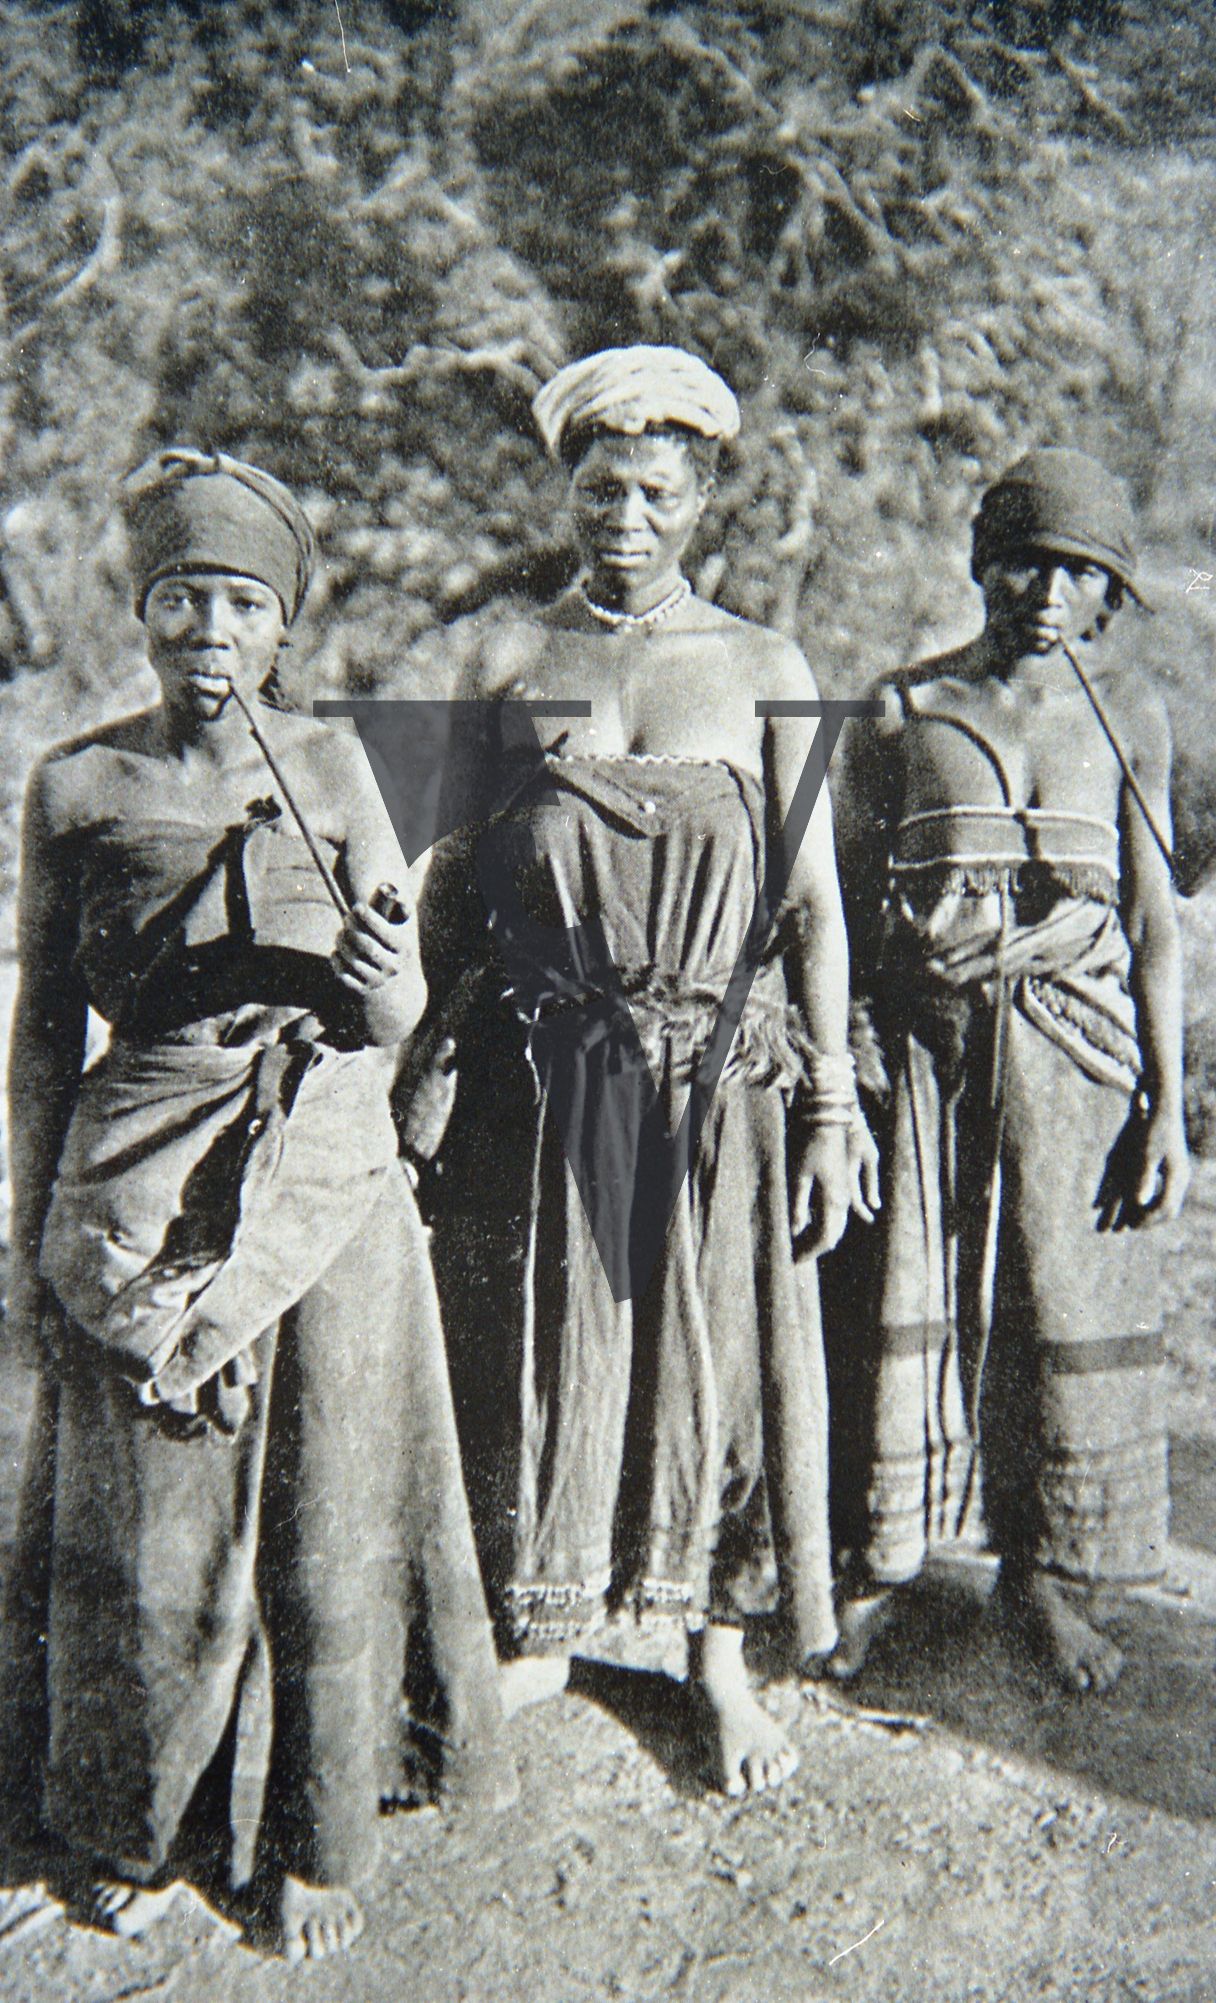 Rhodesia, historical image, three women, portrait.